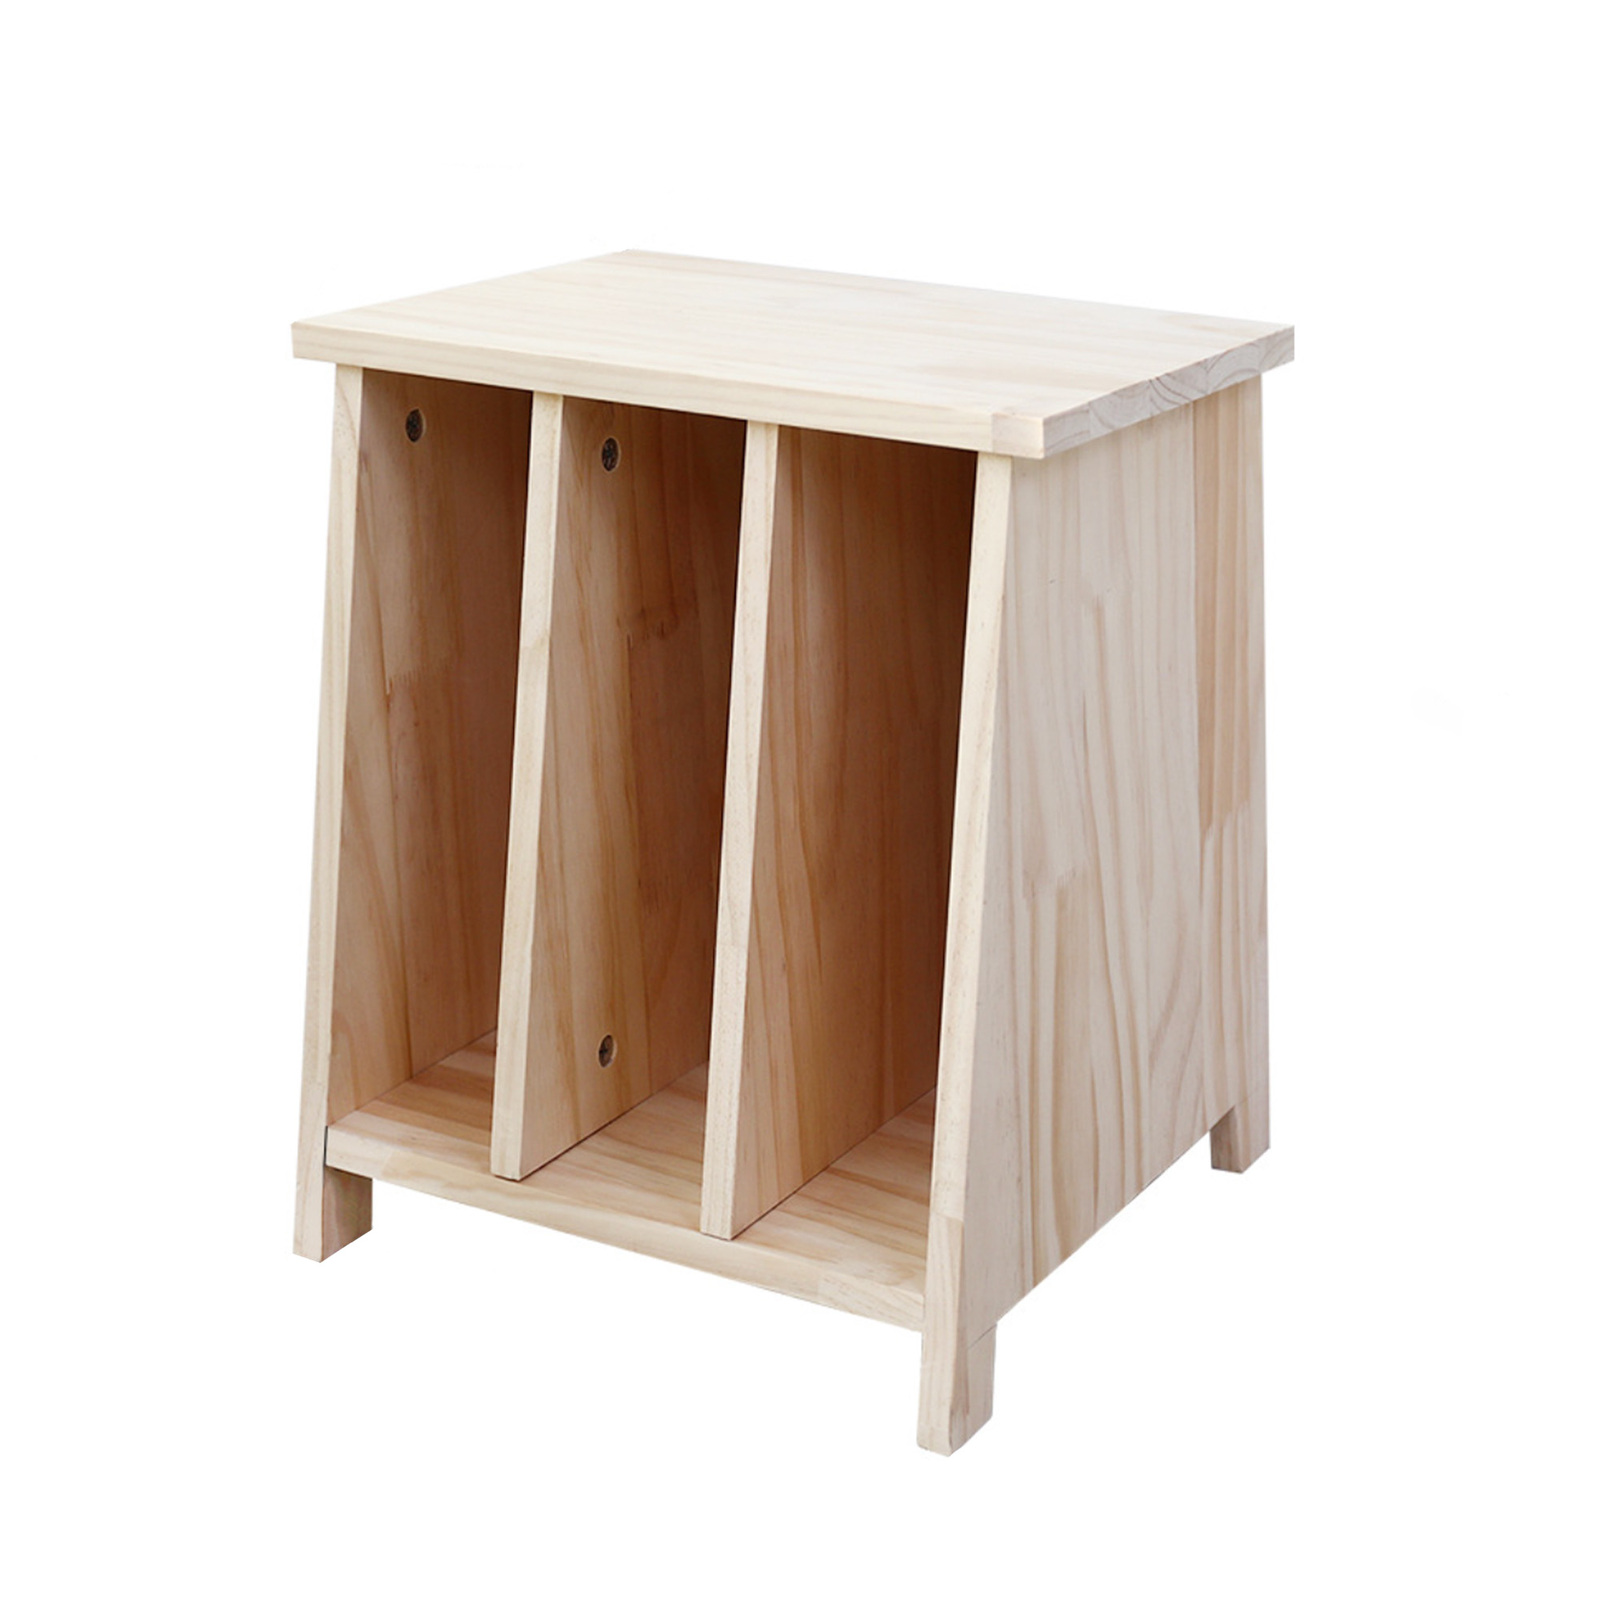 Solid Wood Side End Table 3 Grid Storage Shelf Bedside Table Bedroom Nightstand